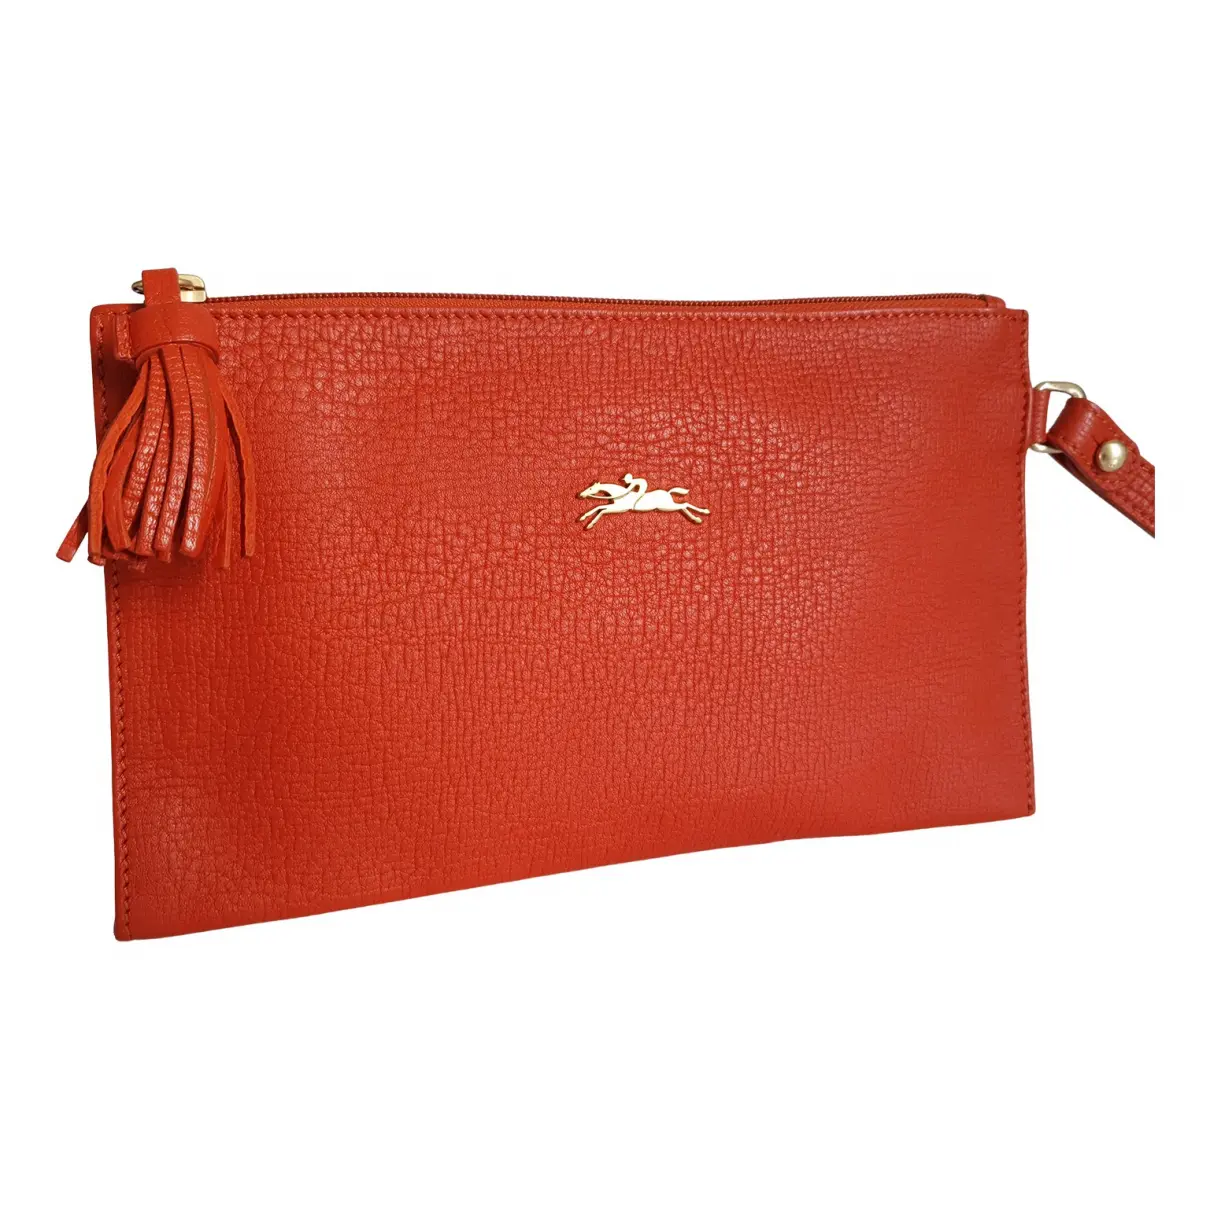 Penelope leather clutch bag Longchamp